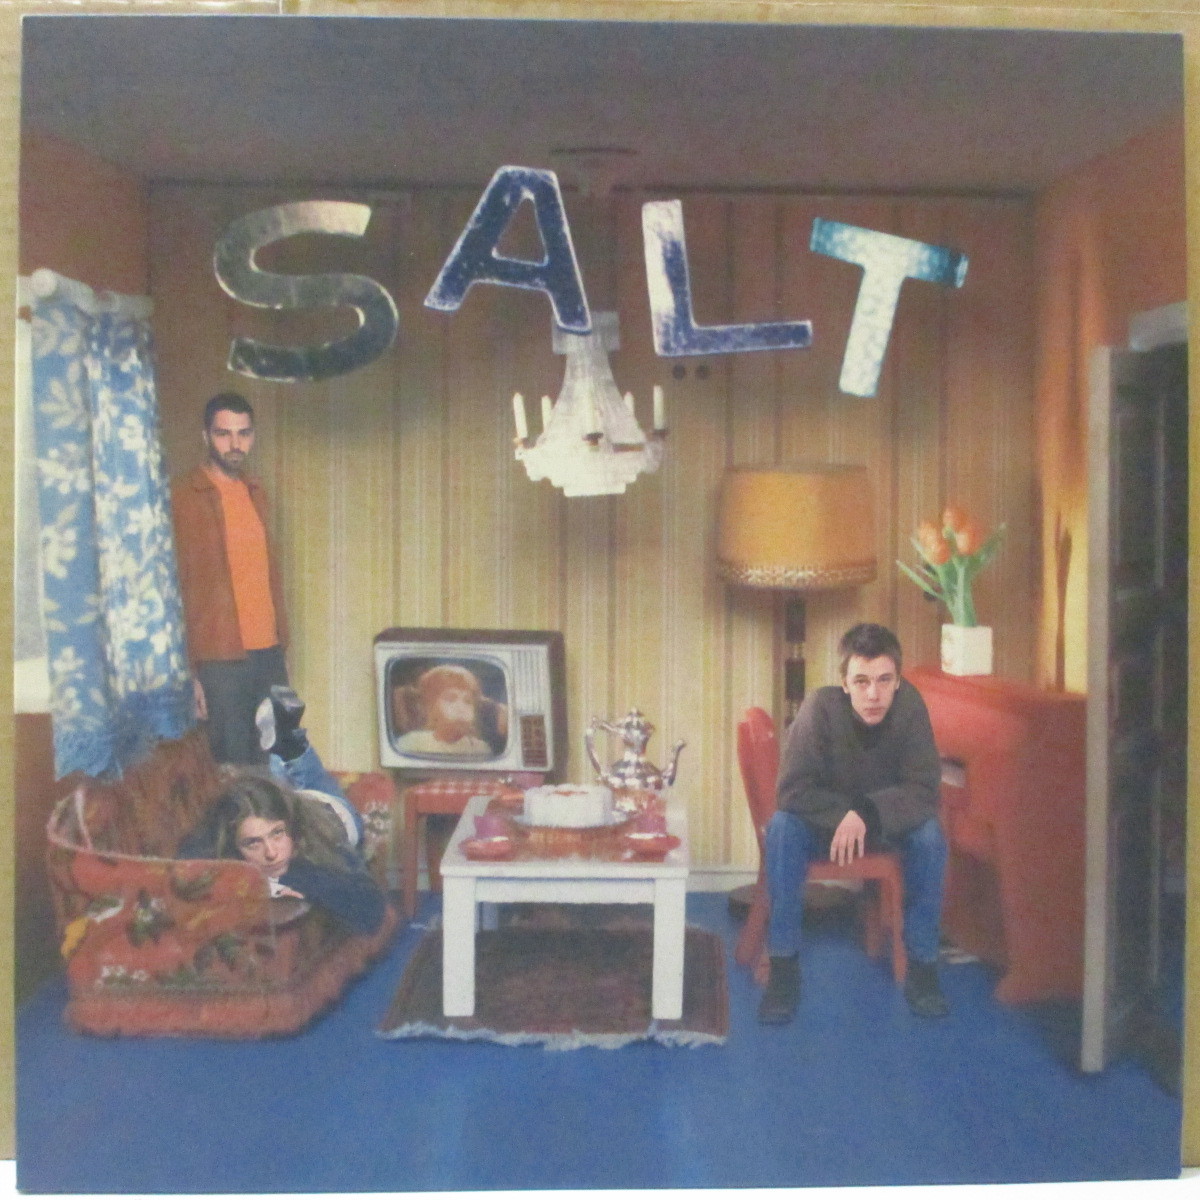 SALT-Auscultate (UK オリジナル LP+インナー/New 廃盤)_画像1